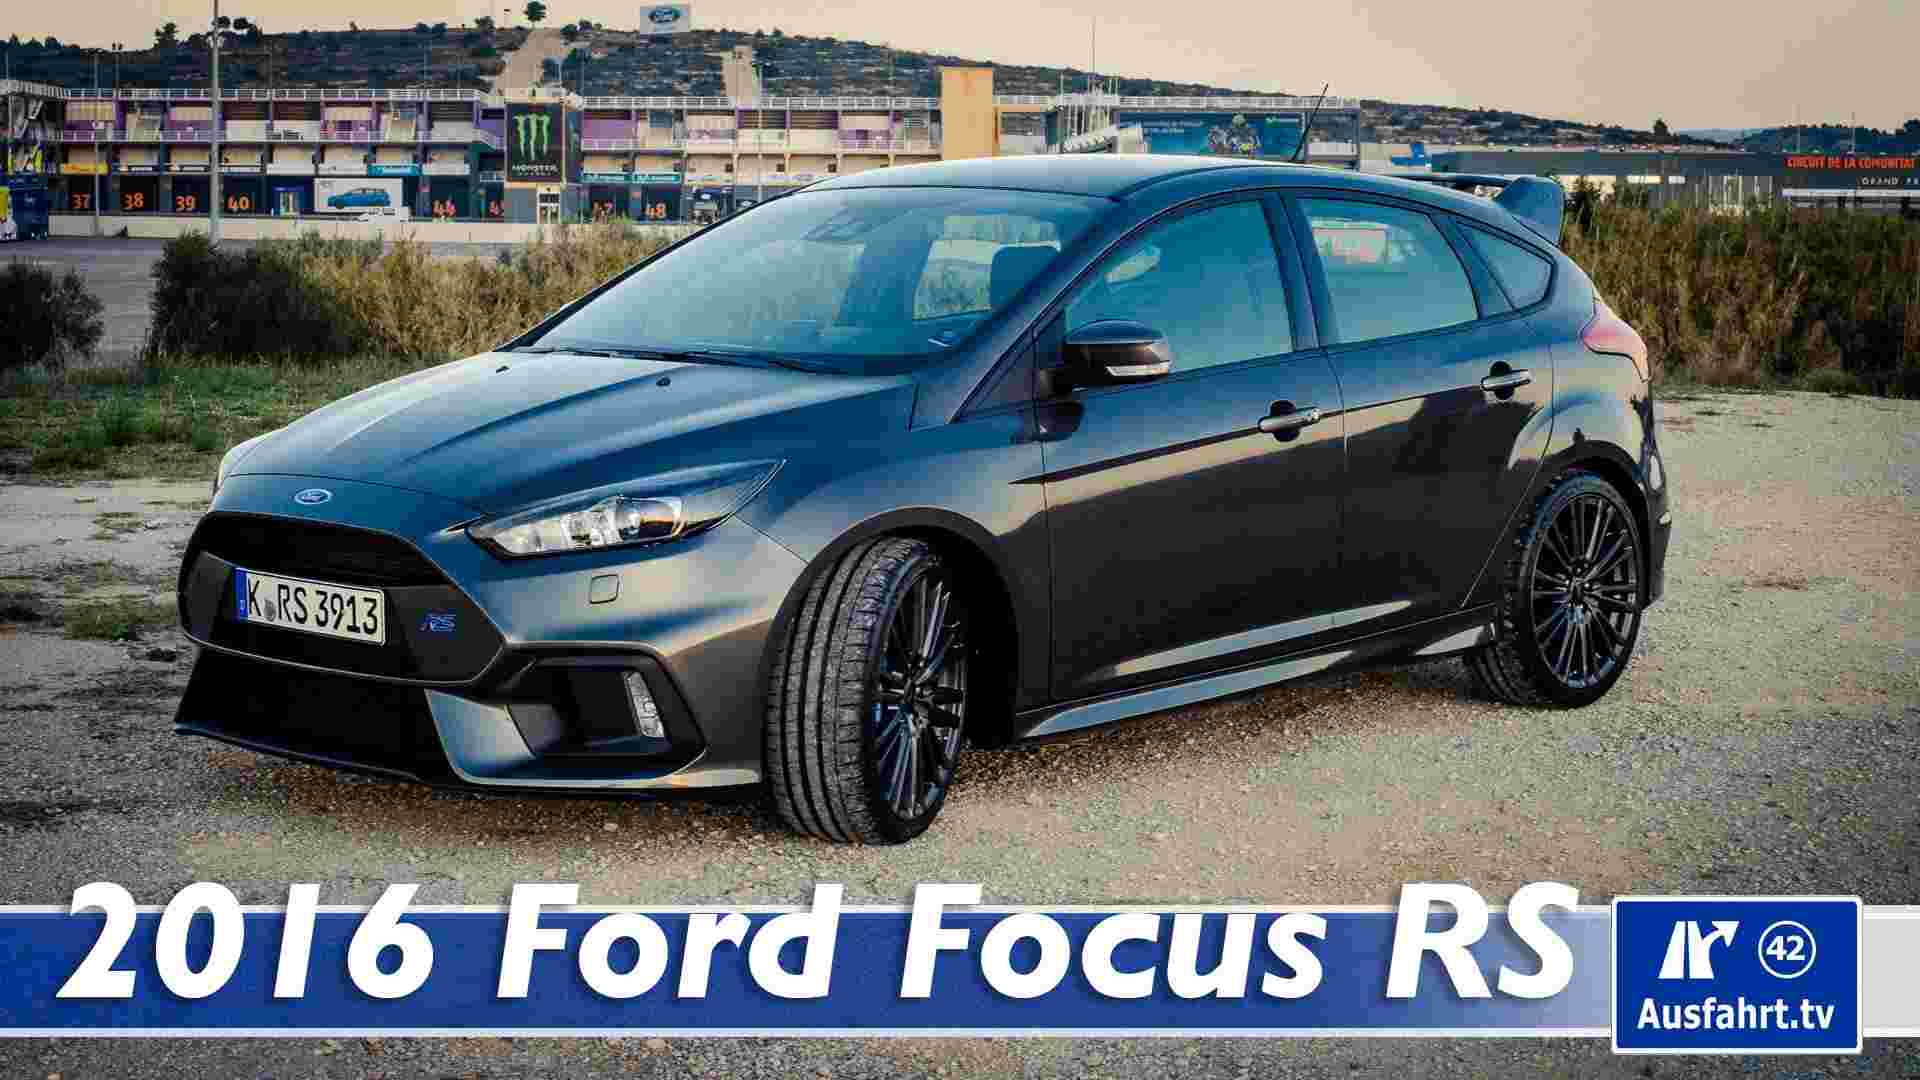 2016 Ford Focus RS Mk. 3 - Fahrbericht der Probefahrt, Test, Review (German)